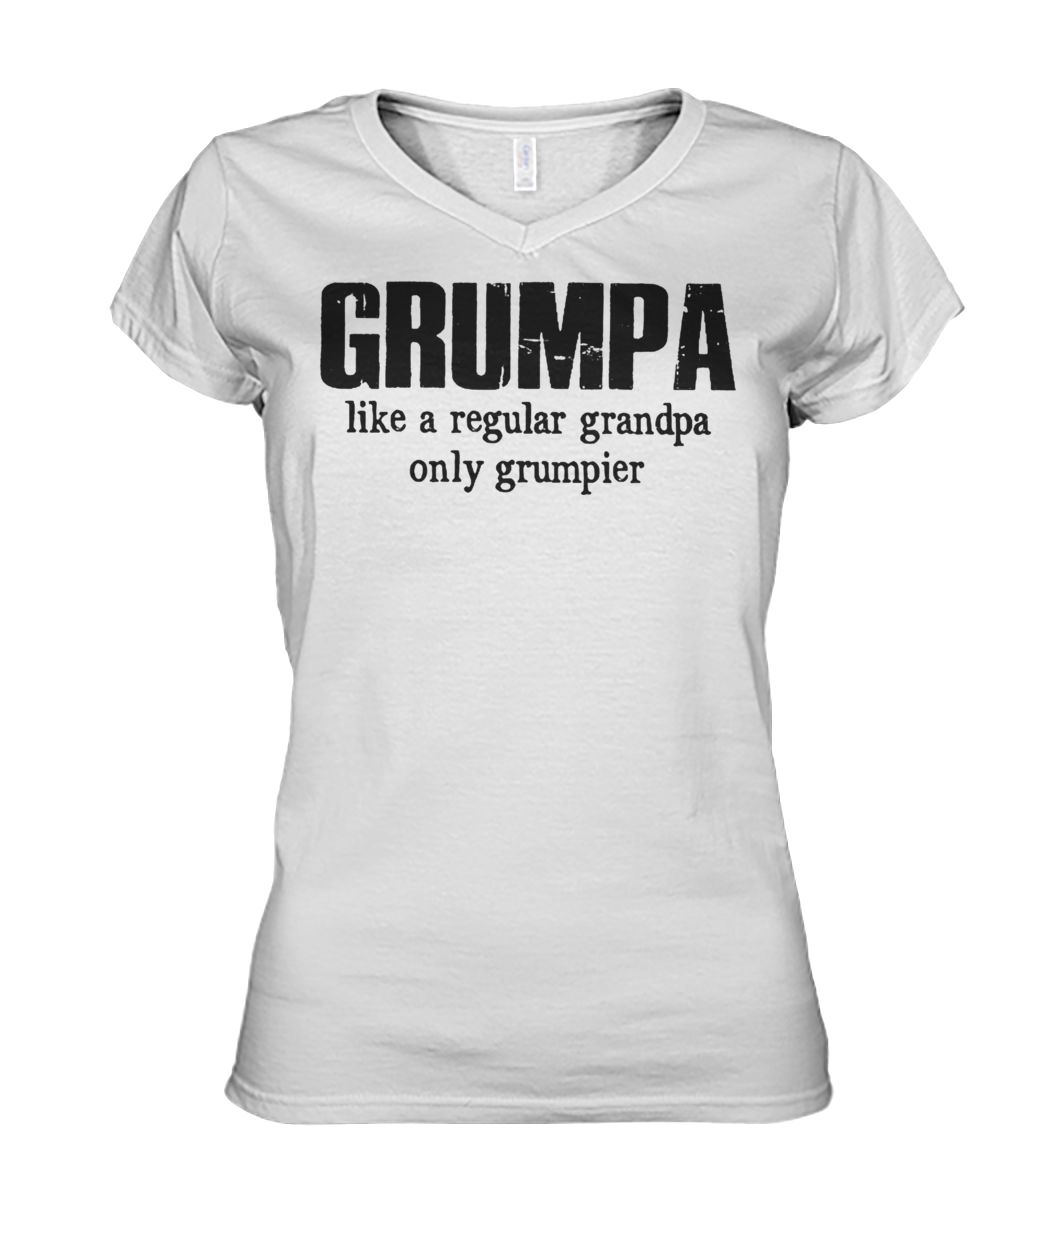 Grumpa like a regular grandpa only grumpier women's v-neck